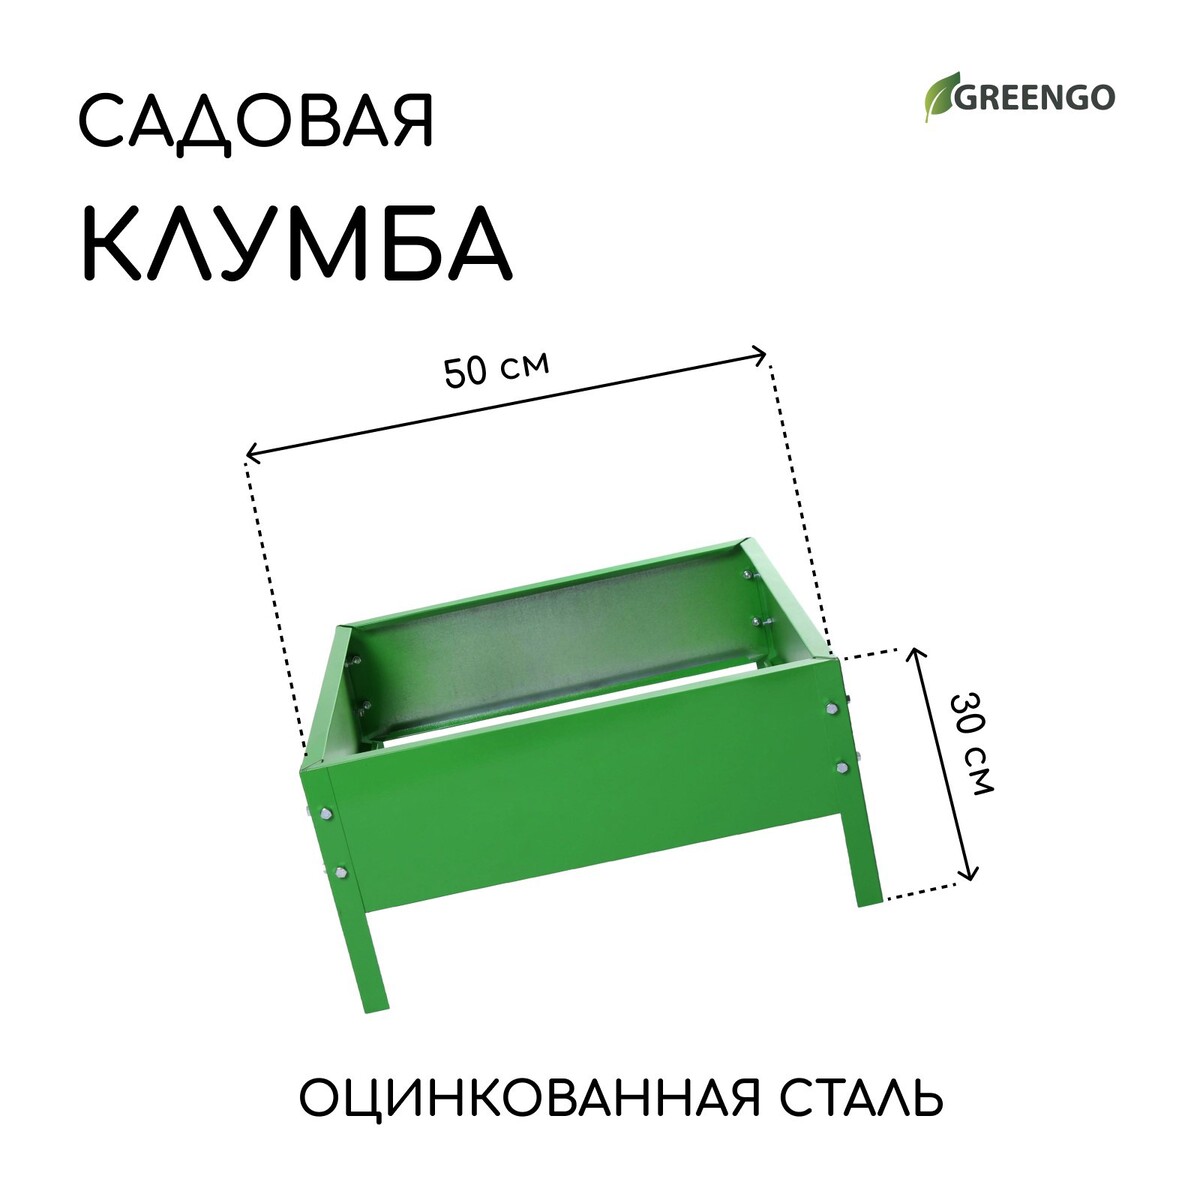 Клумба оцинкованная, 50 × 50 × 15 см, ярко-зеленая, greengo краска ма 15 царицынские краски ярко зеленая 0 9кг